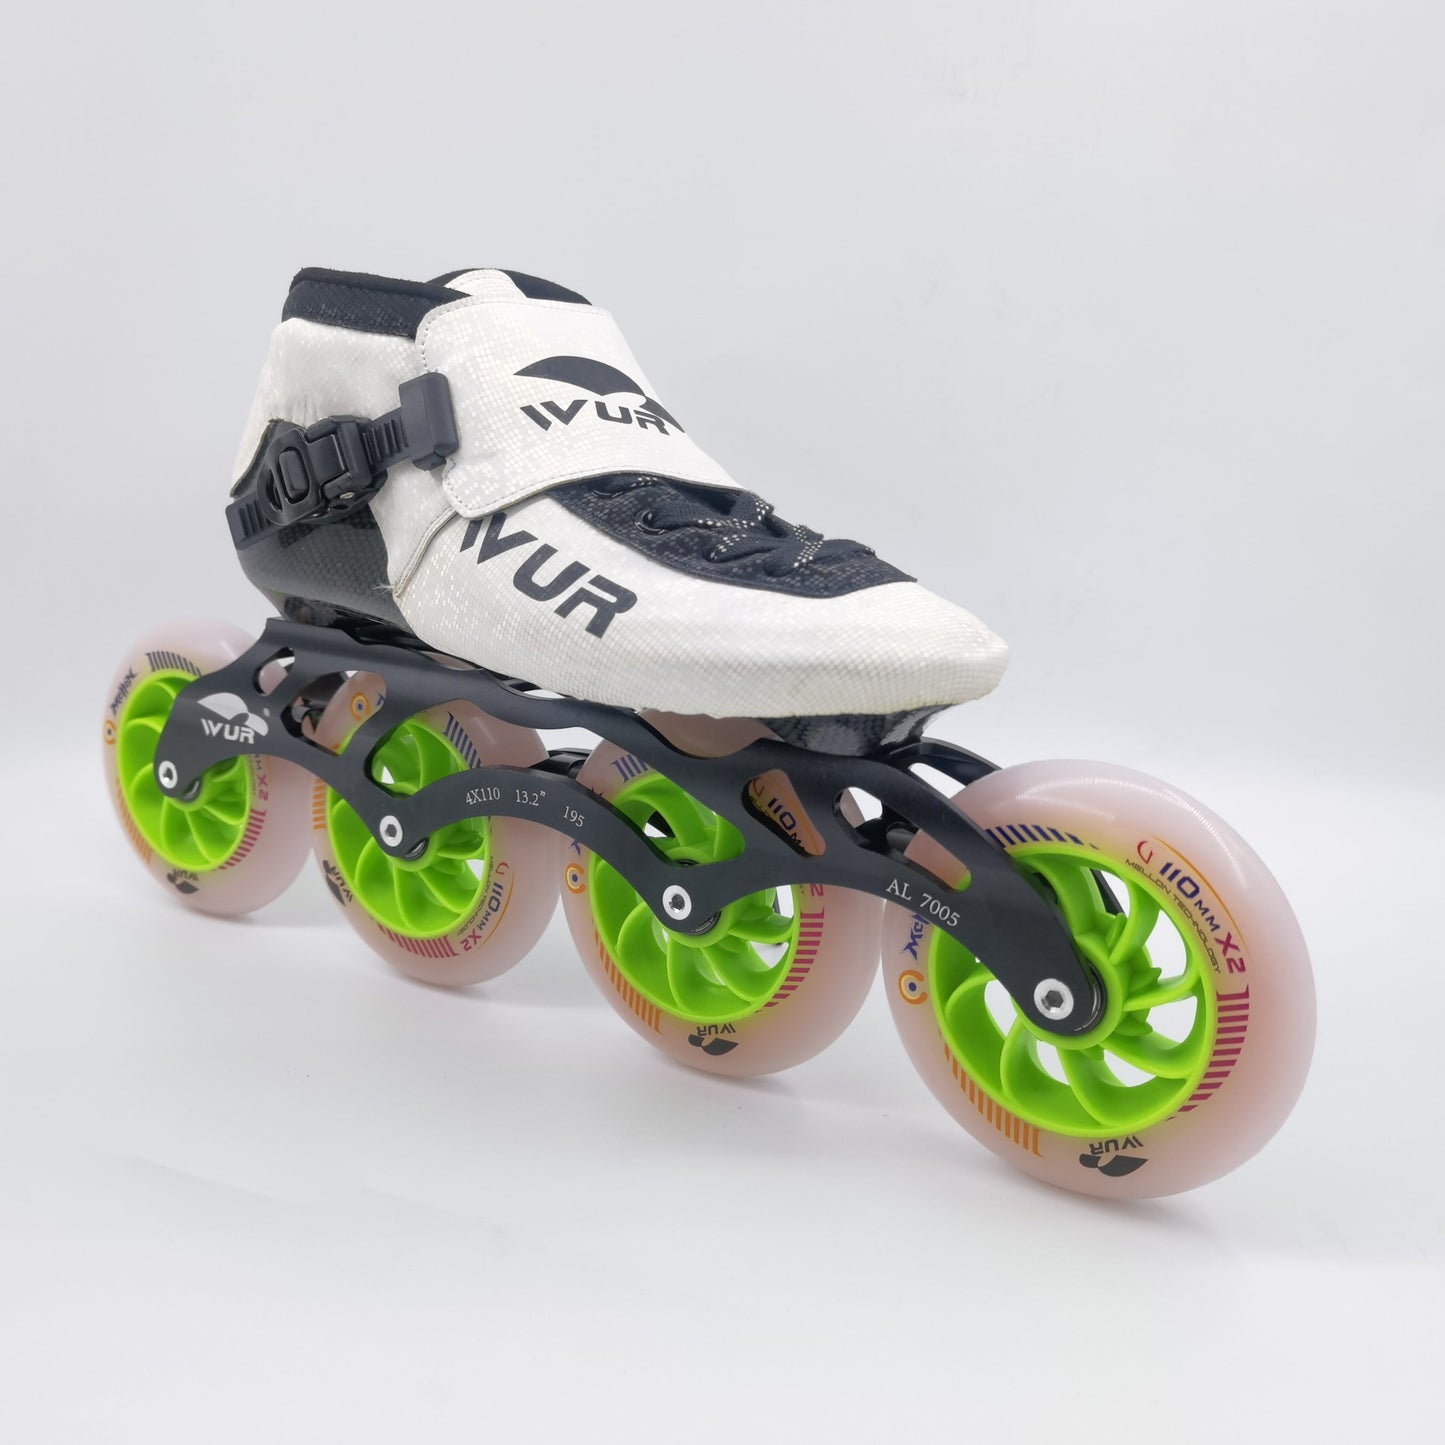 WUR Skates model B1 With Double Hardness Wheel